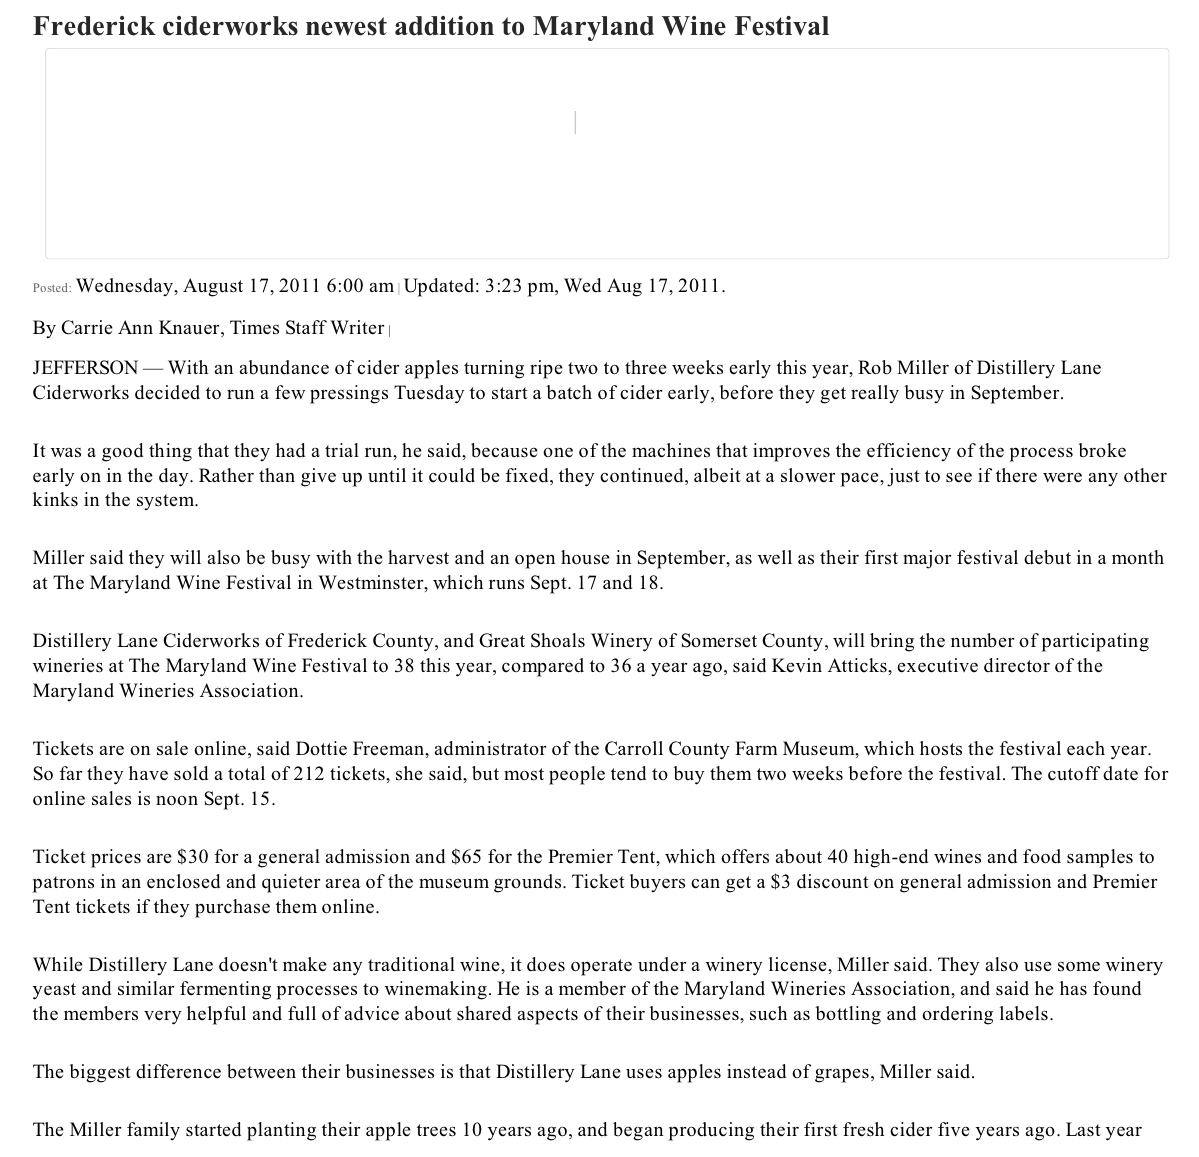 Frederick-Ciderworks-Newest-Addition-to-Maryland-Wine-Festival-Knauer